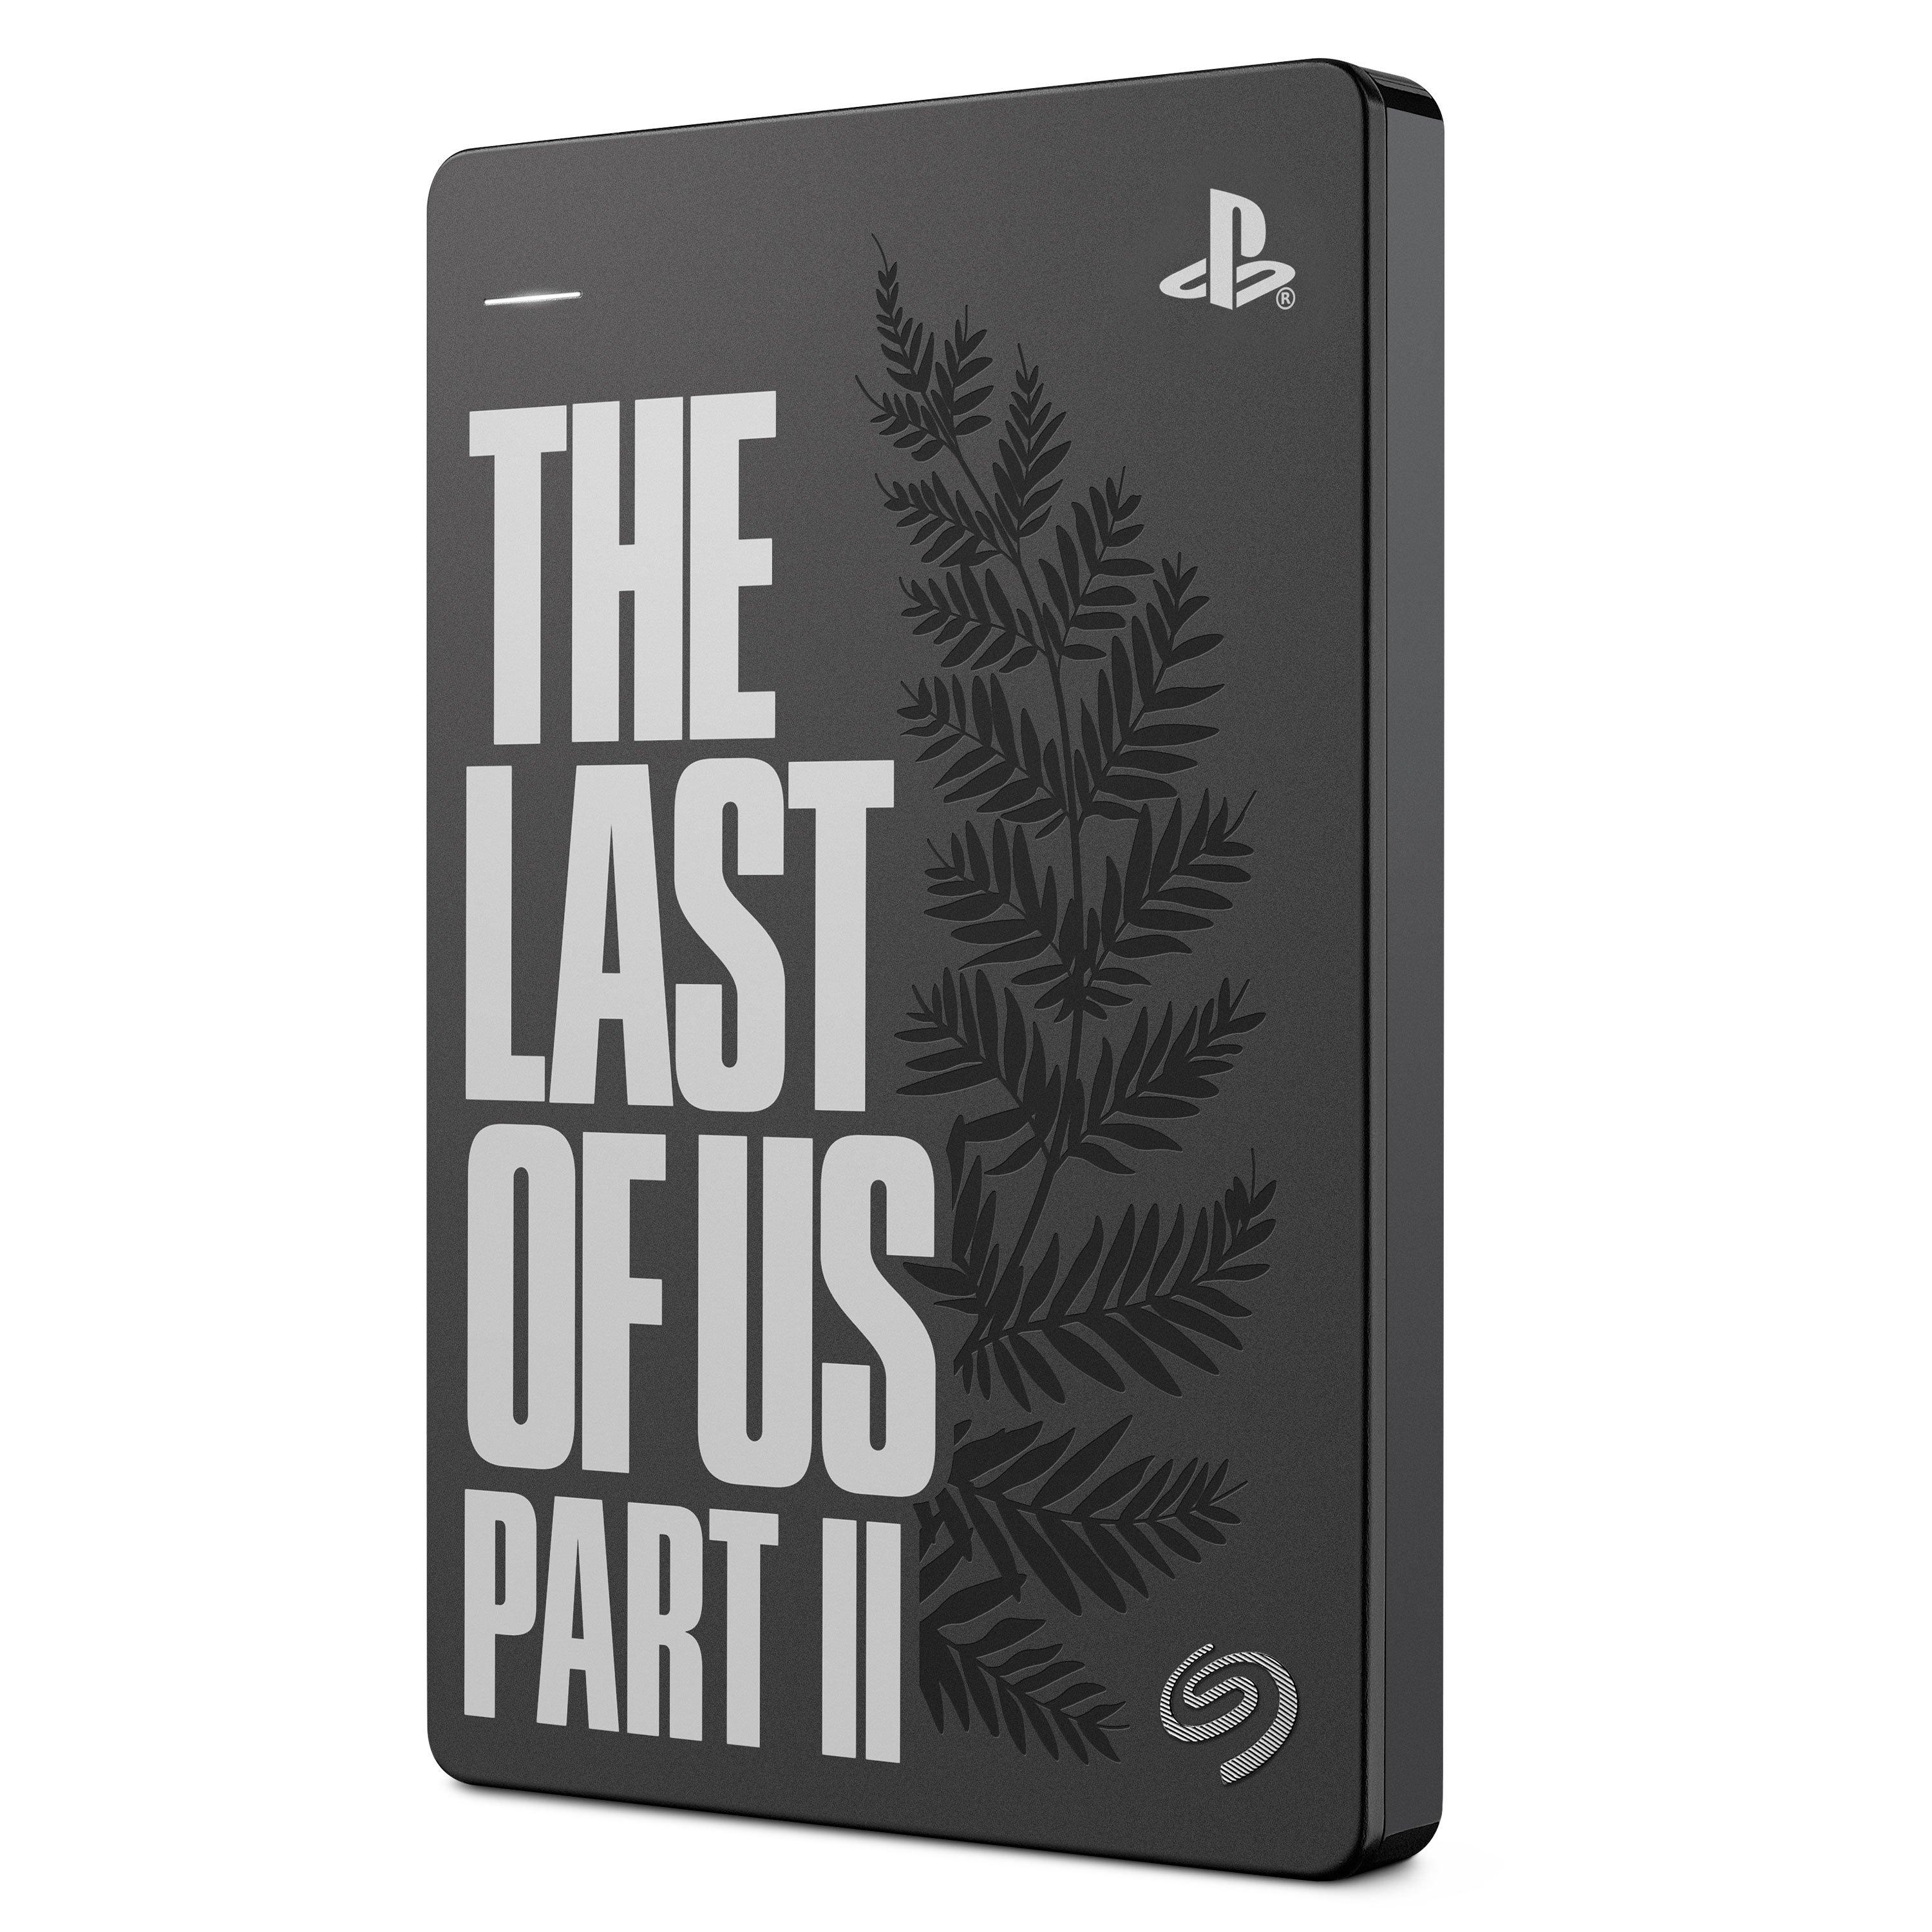 external hard drive for ps4 gamestop